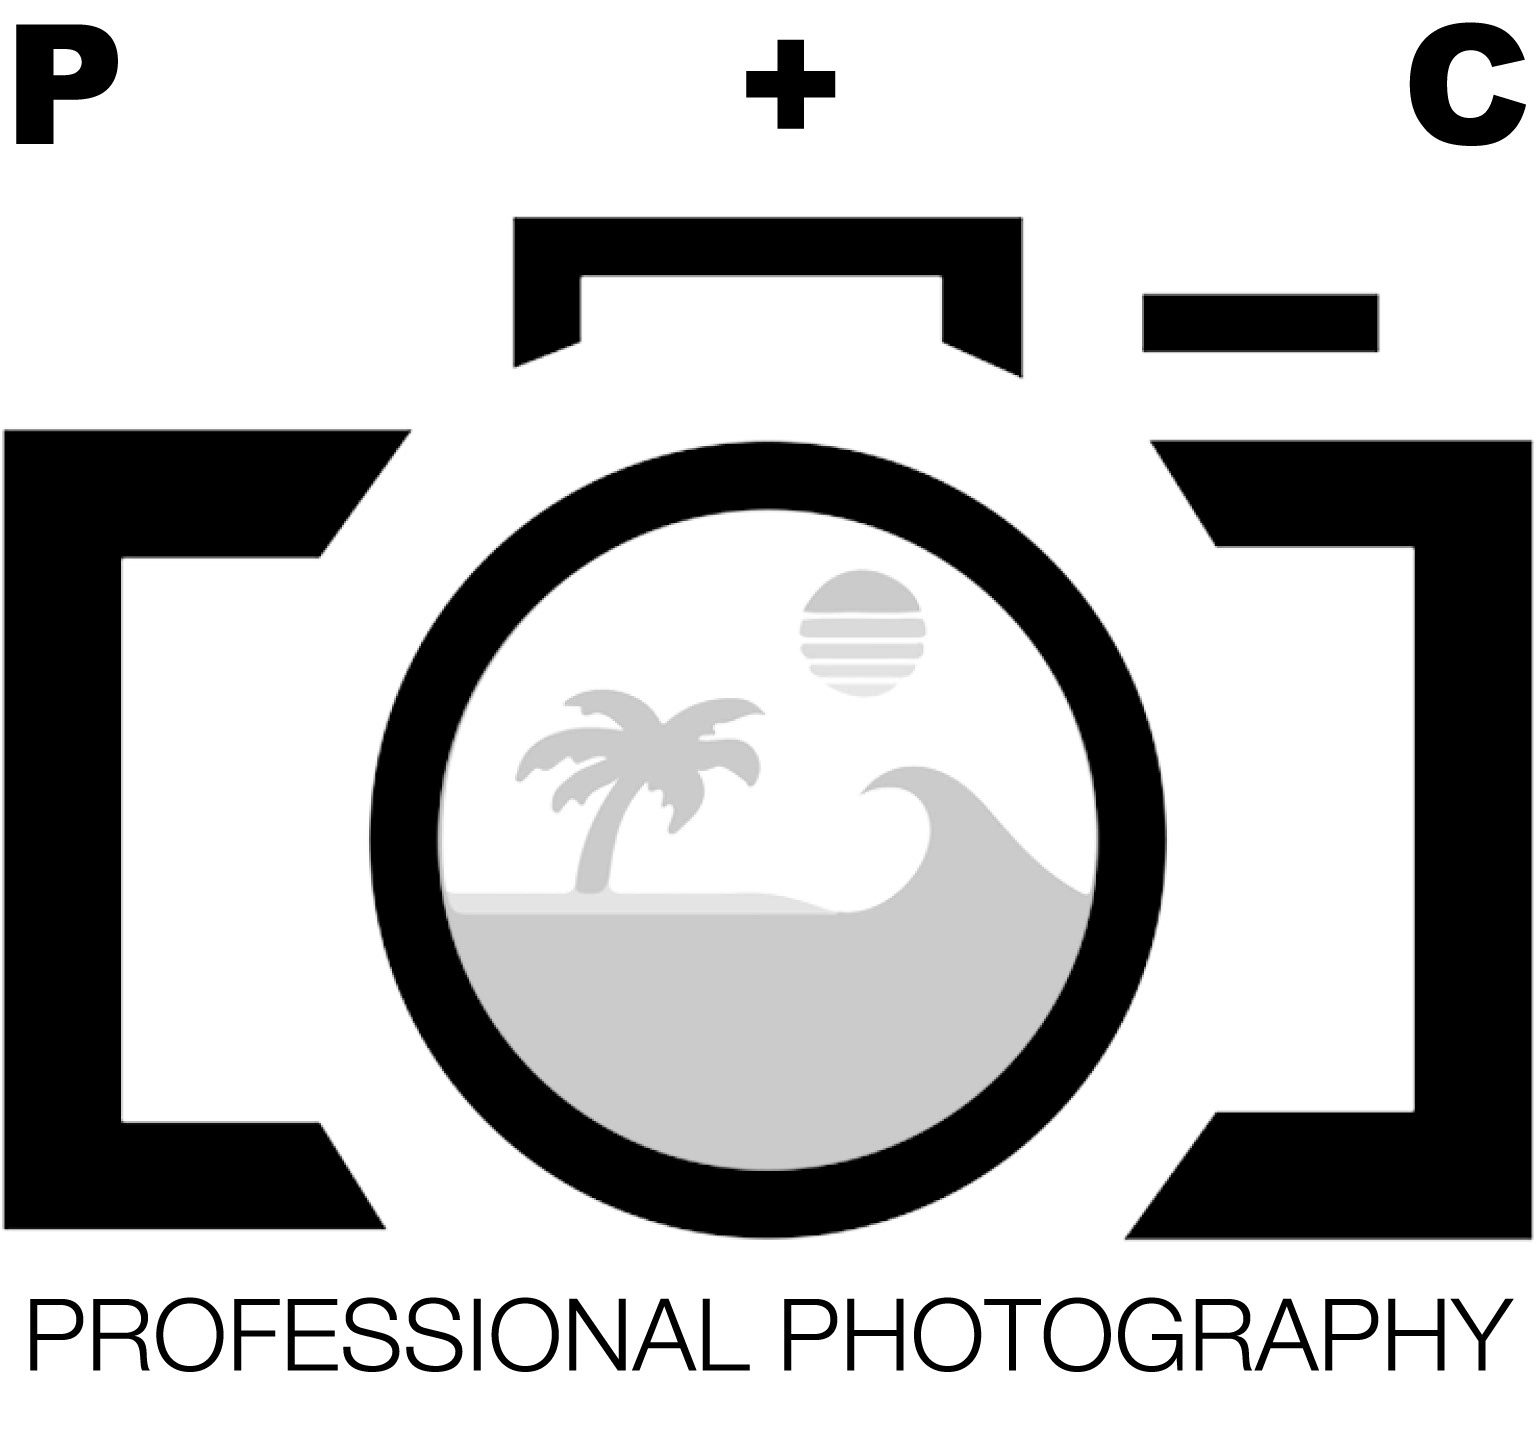 P+C Professional Photography